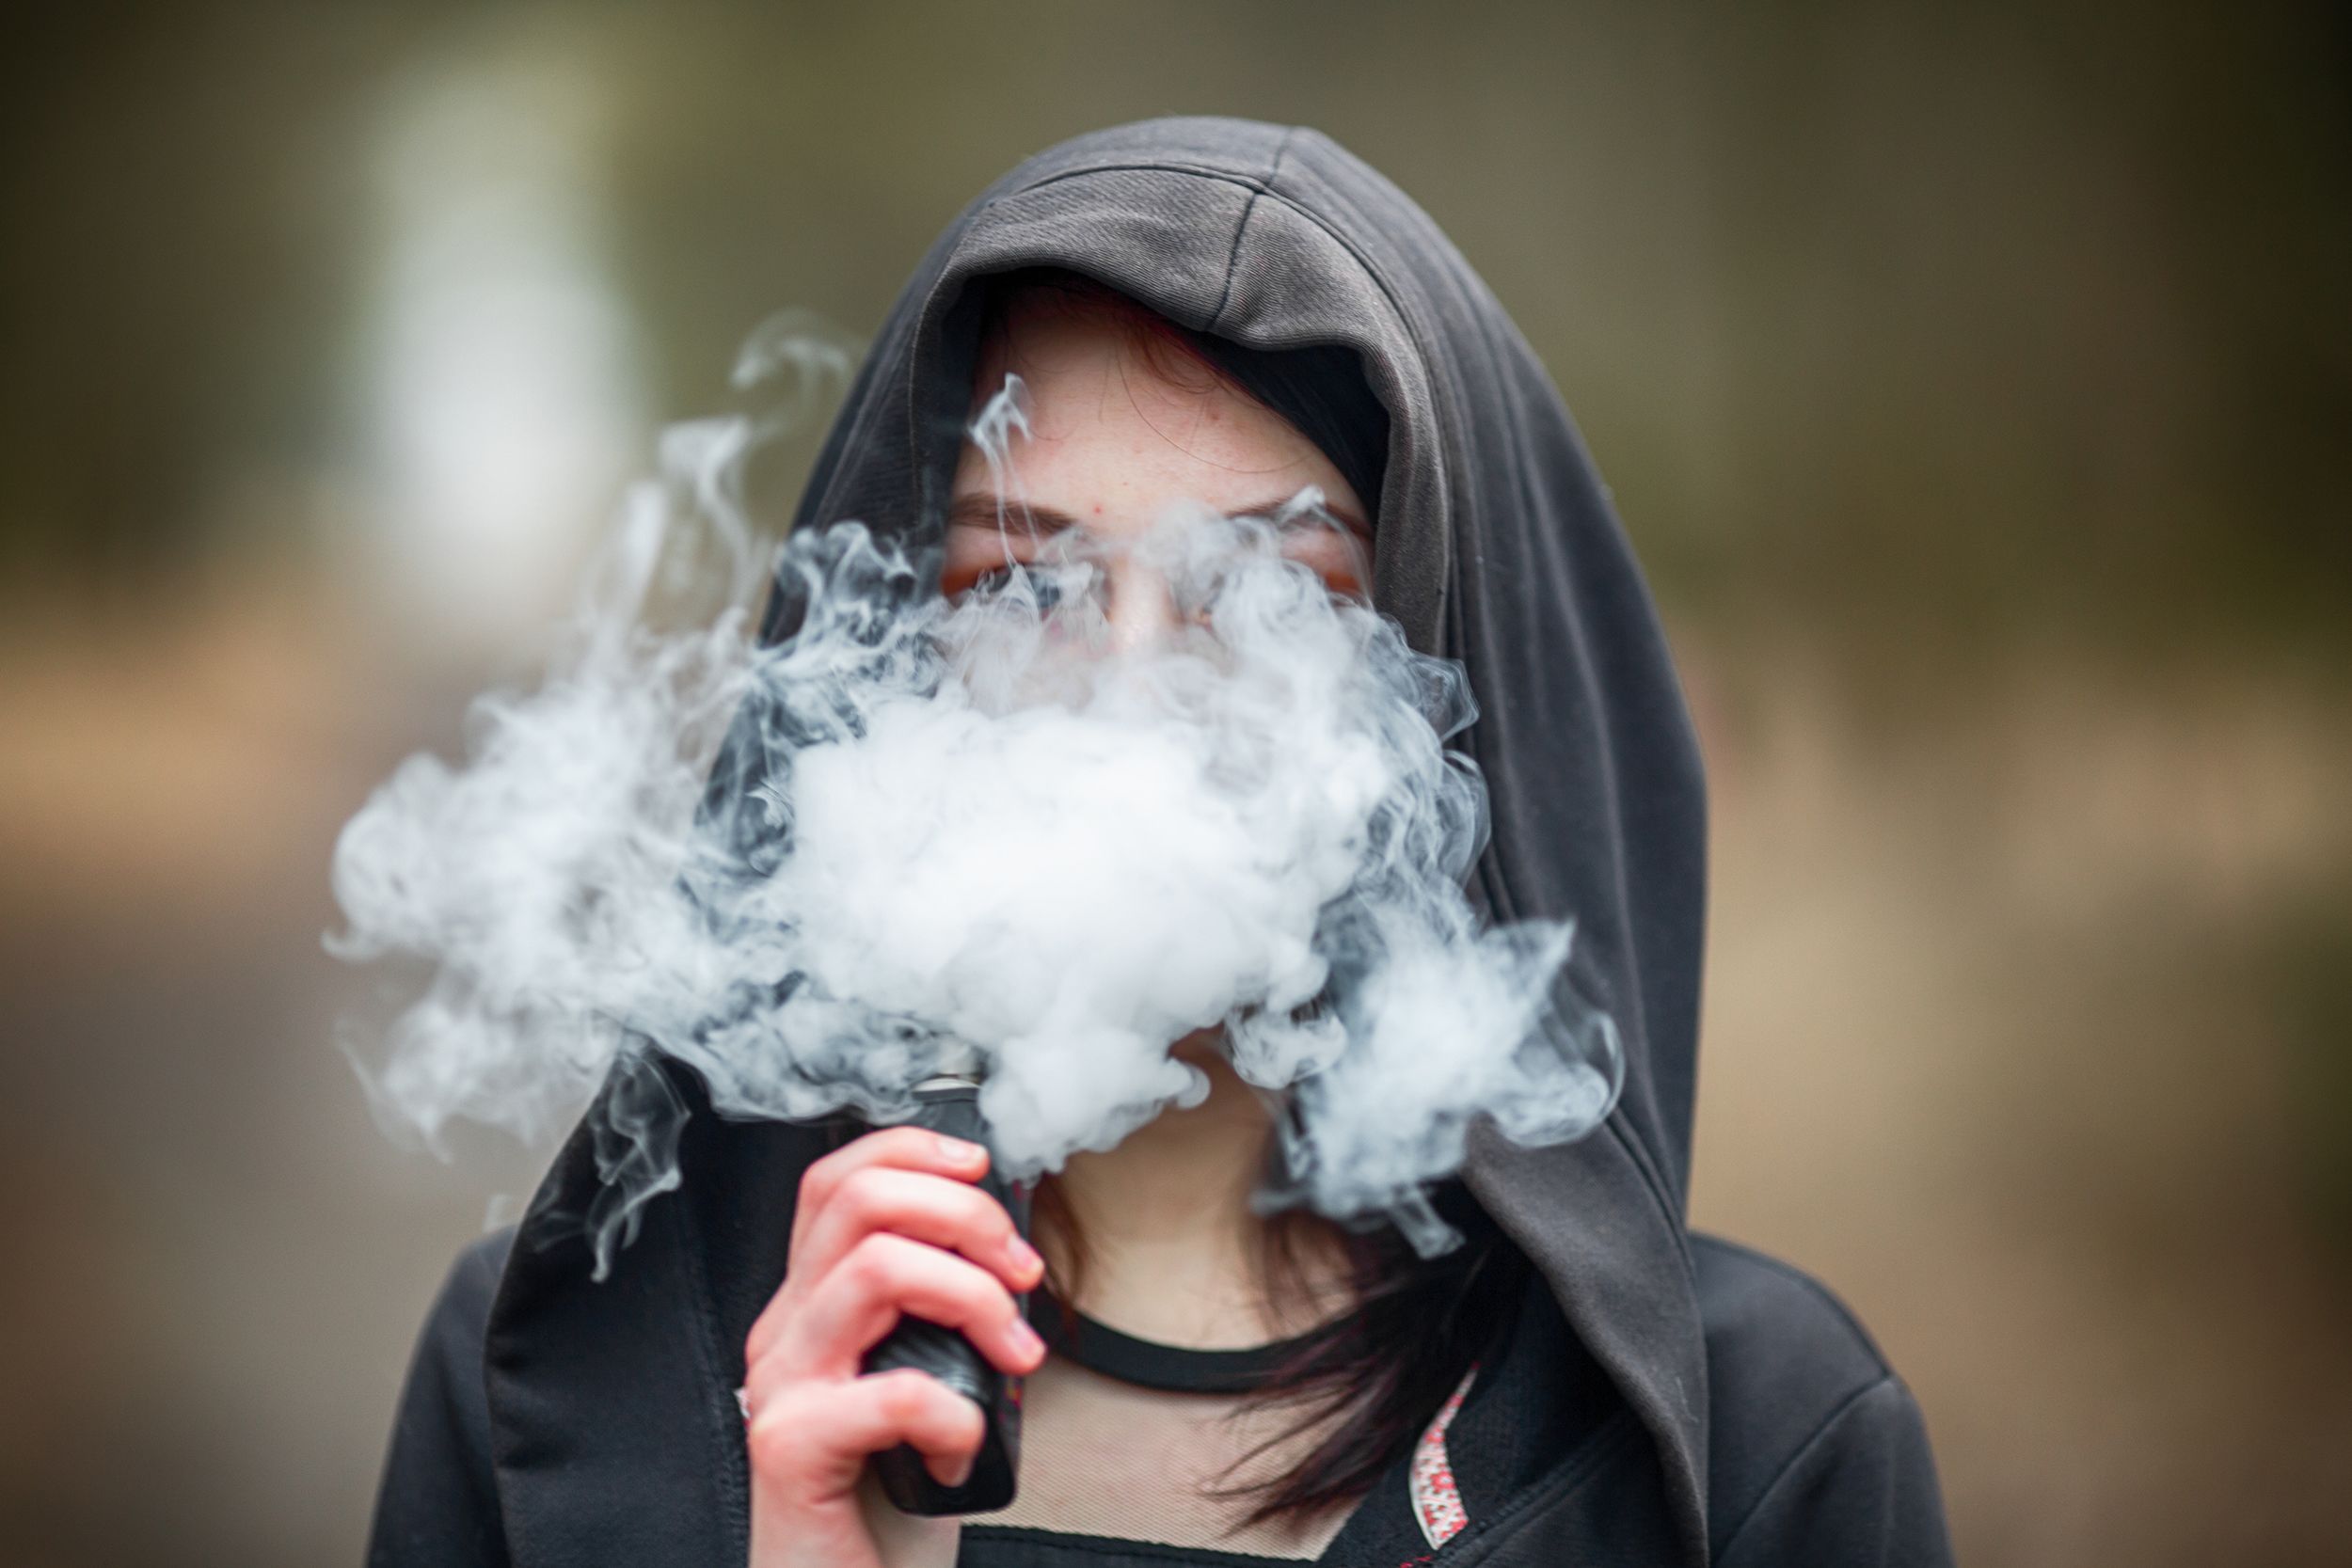 Cannabis vaping among teens has grown sharply in recent years : NPR